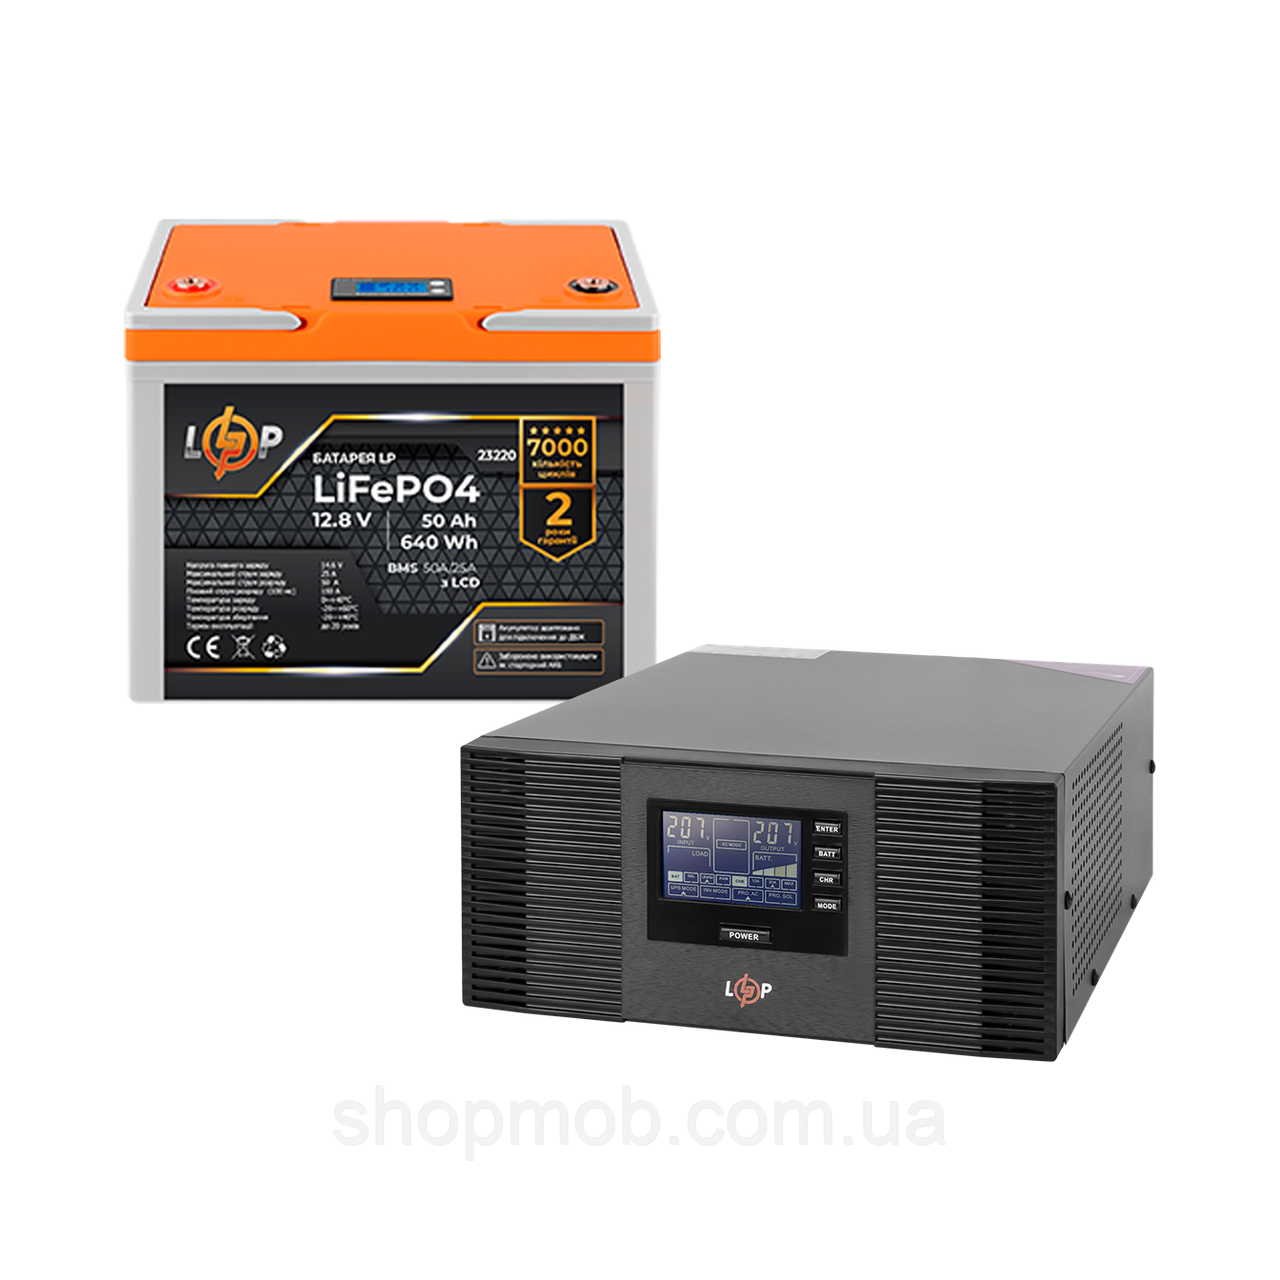 SM  SM Комплект резервного питания LogicPower B1500 + литиевая (LiFePO4) батарея 640Wh